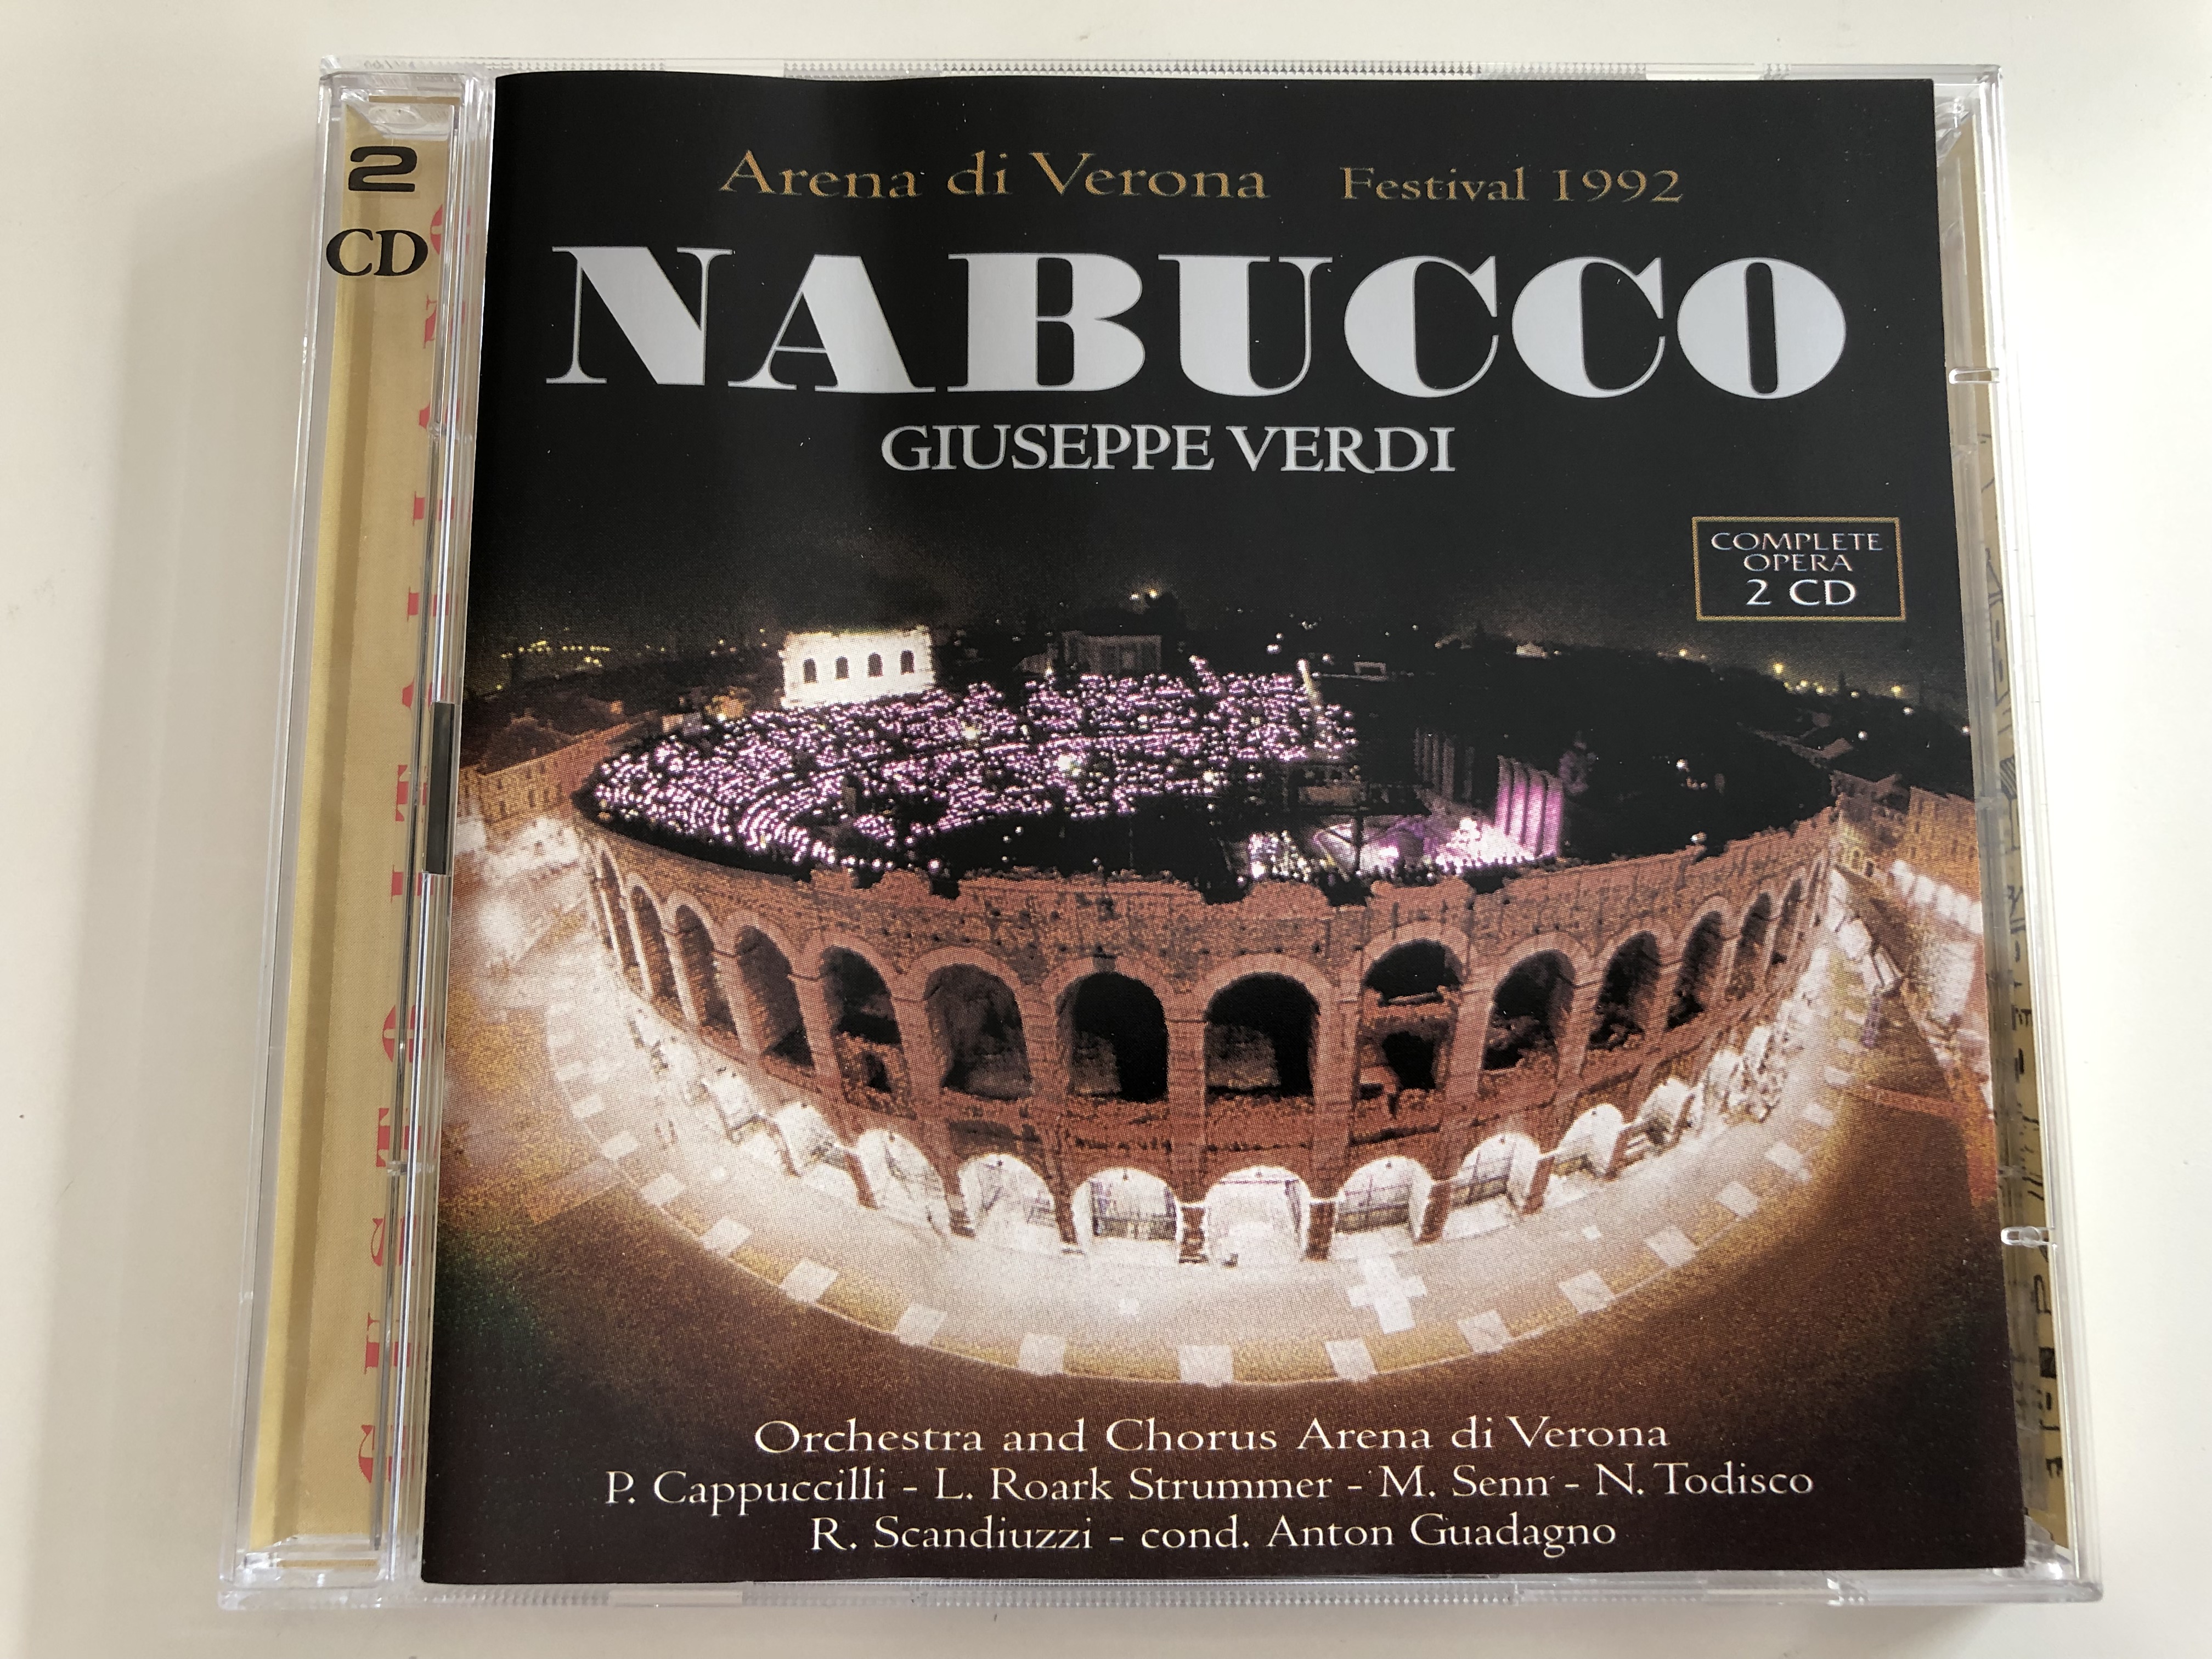 giuseppe-verdi-nabucco-arena-di-verona-festival-1992-complete-opera-2-cd-orchestra-and-chorus-arena-di-verona-p.-cappuccilli-l.-roark-strummer-m.-senn-n.-todisco-r.-scandiuzzi-conducted-by-anton-guadagno-2x-au-1-.jpg